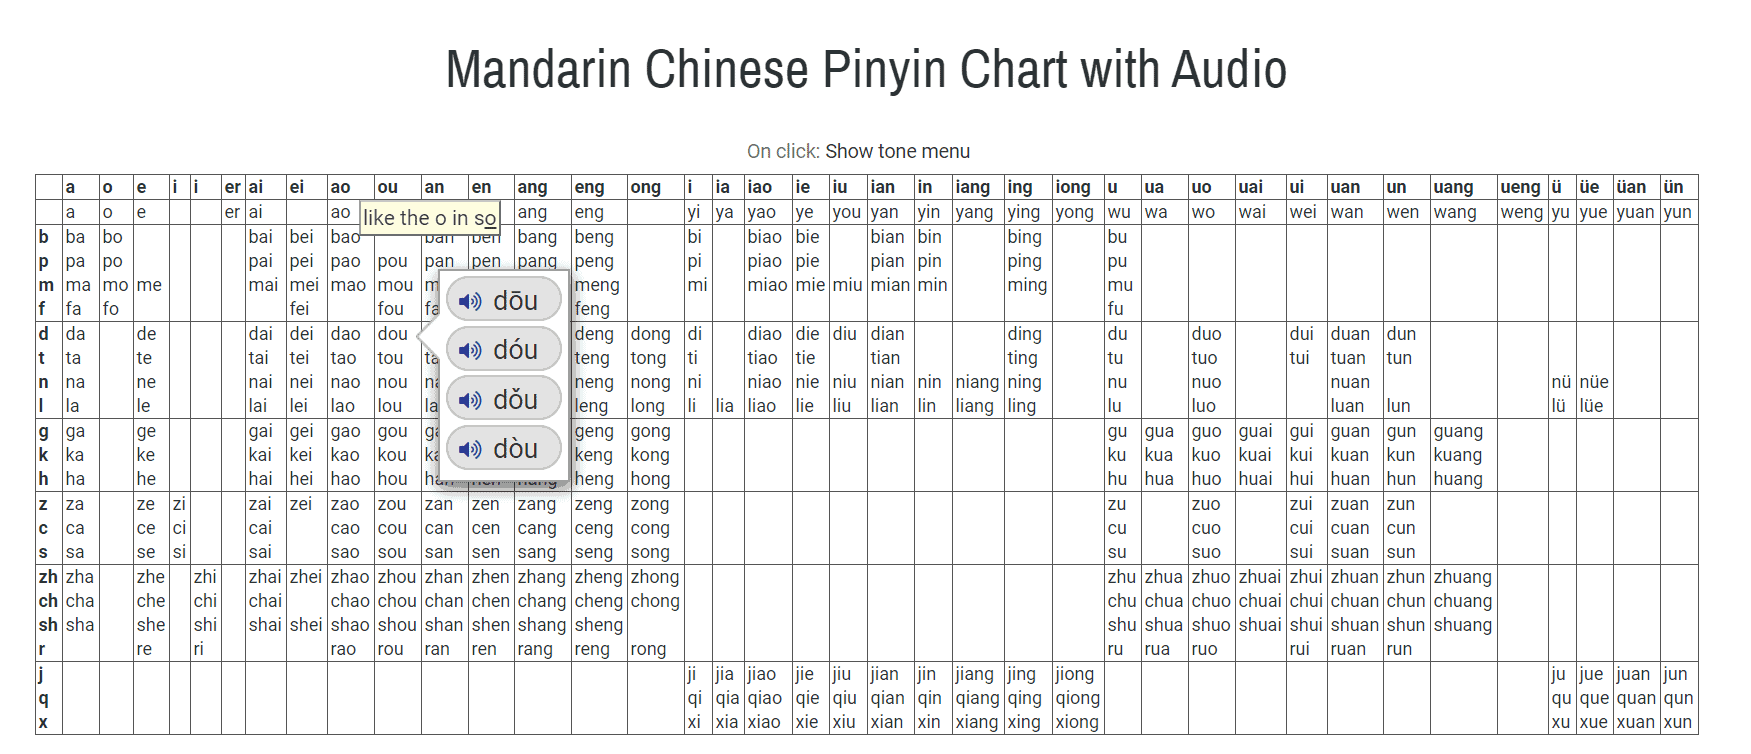 Mandarin Chinese Pinyin Chart